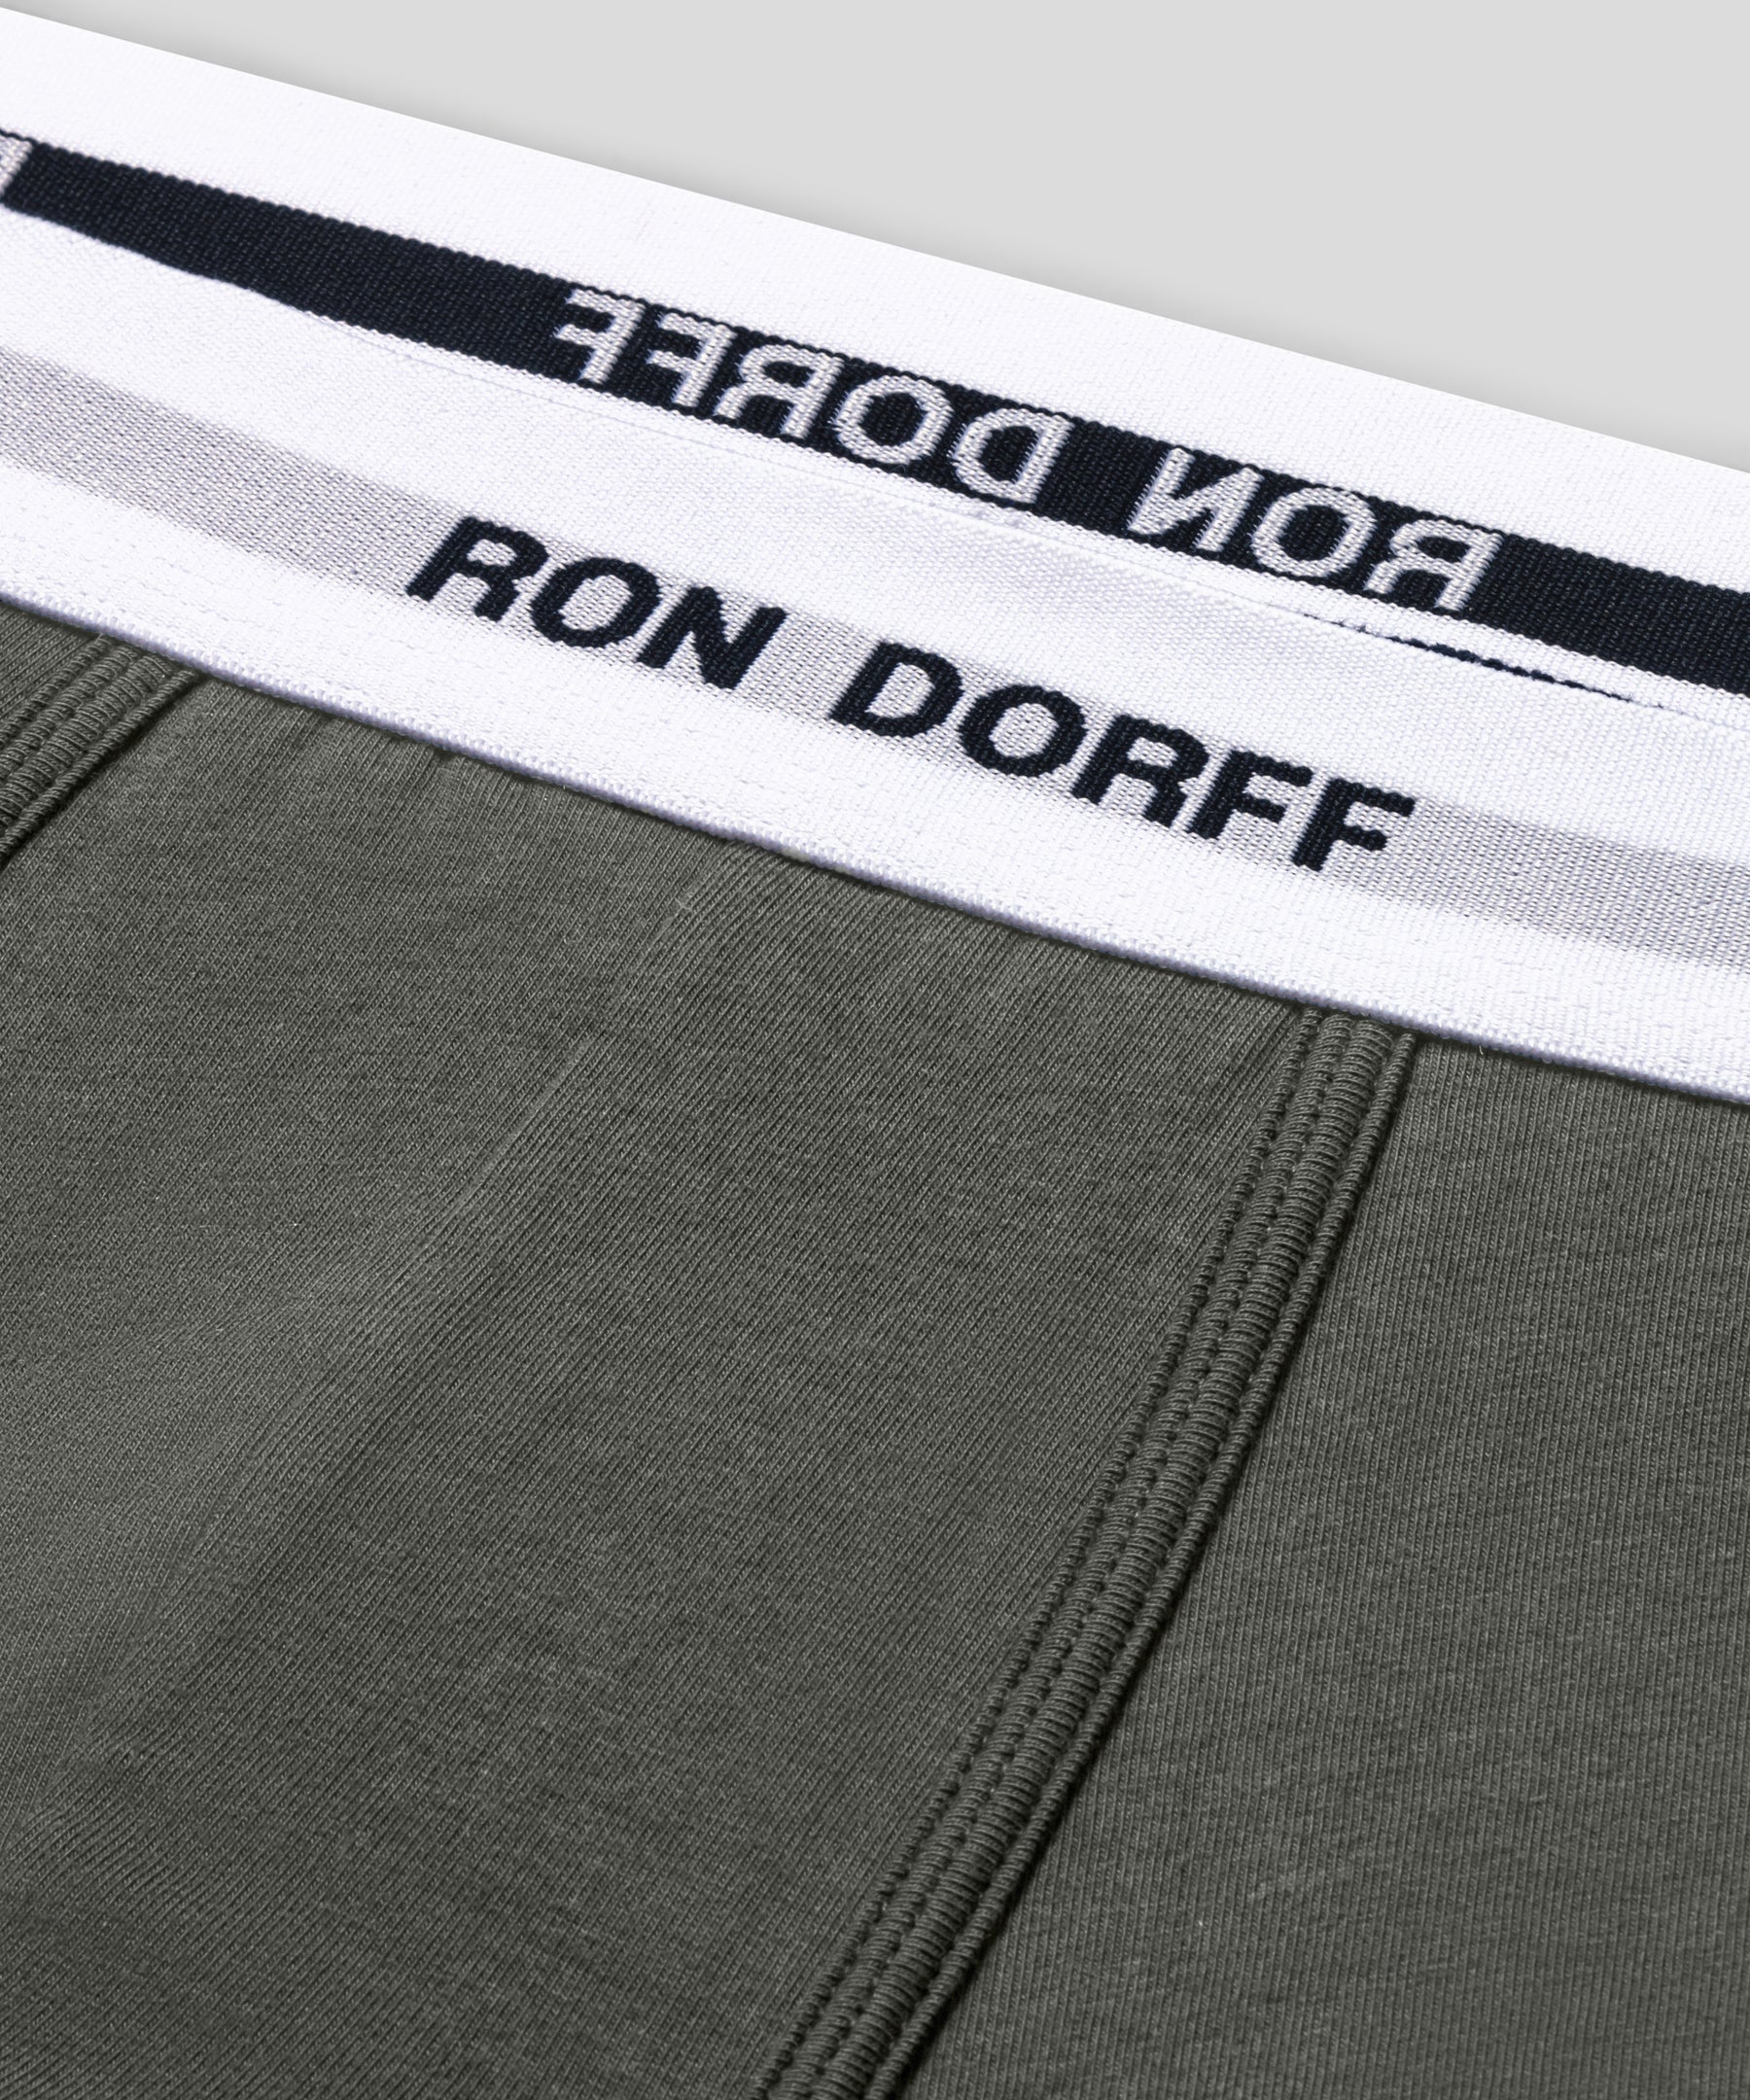 RON DORFF Boxer Briefs Kit: Heather Grey/Army Green/Deep Blue